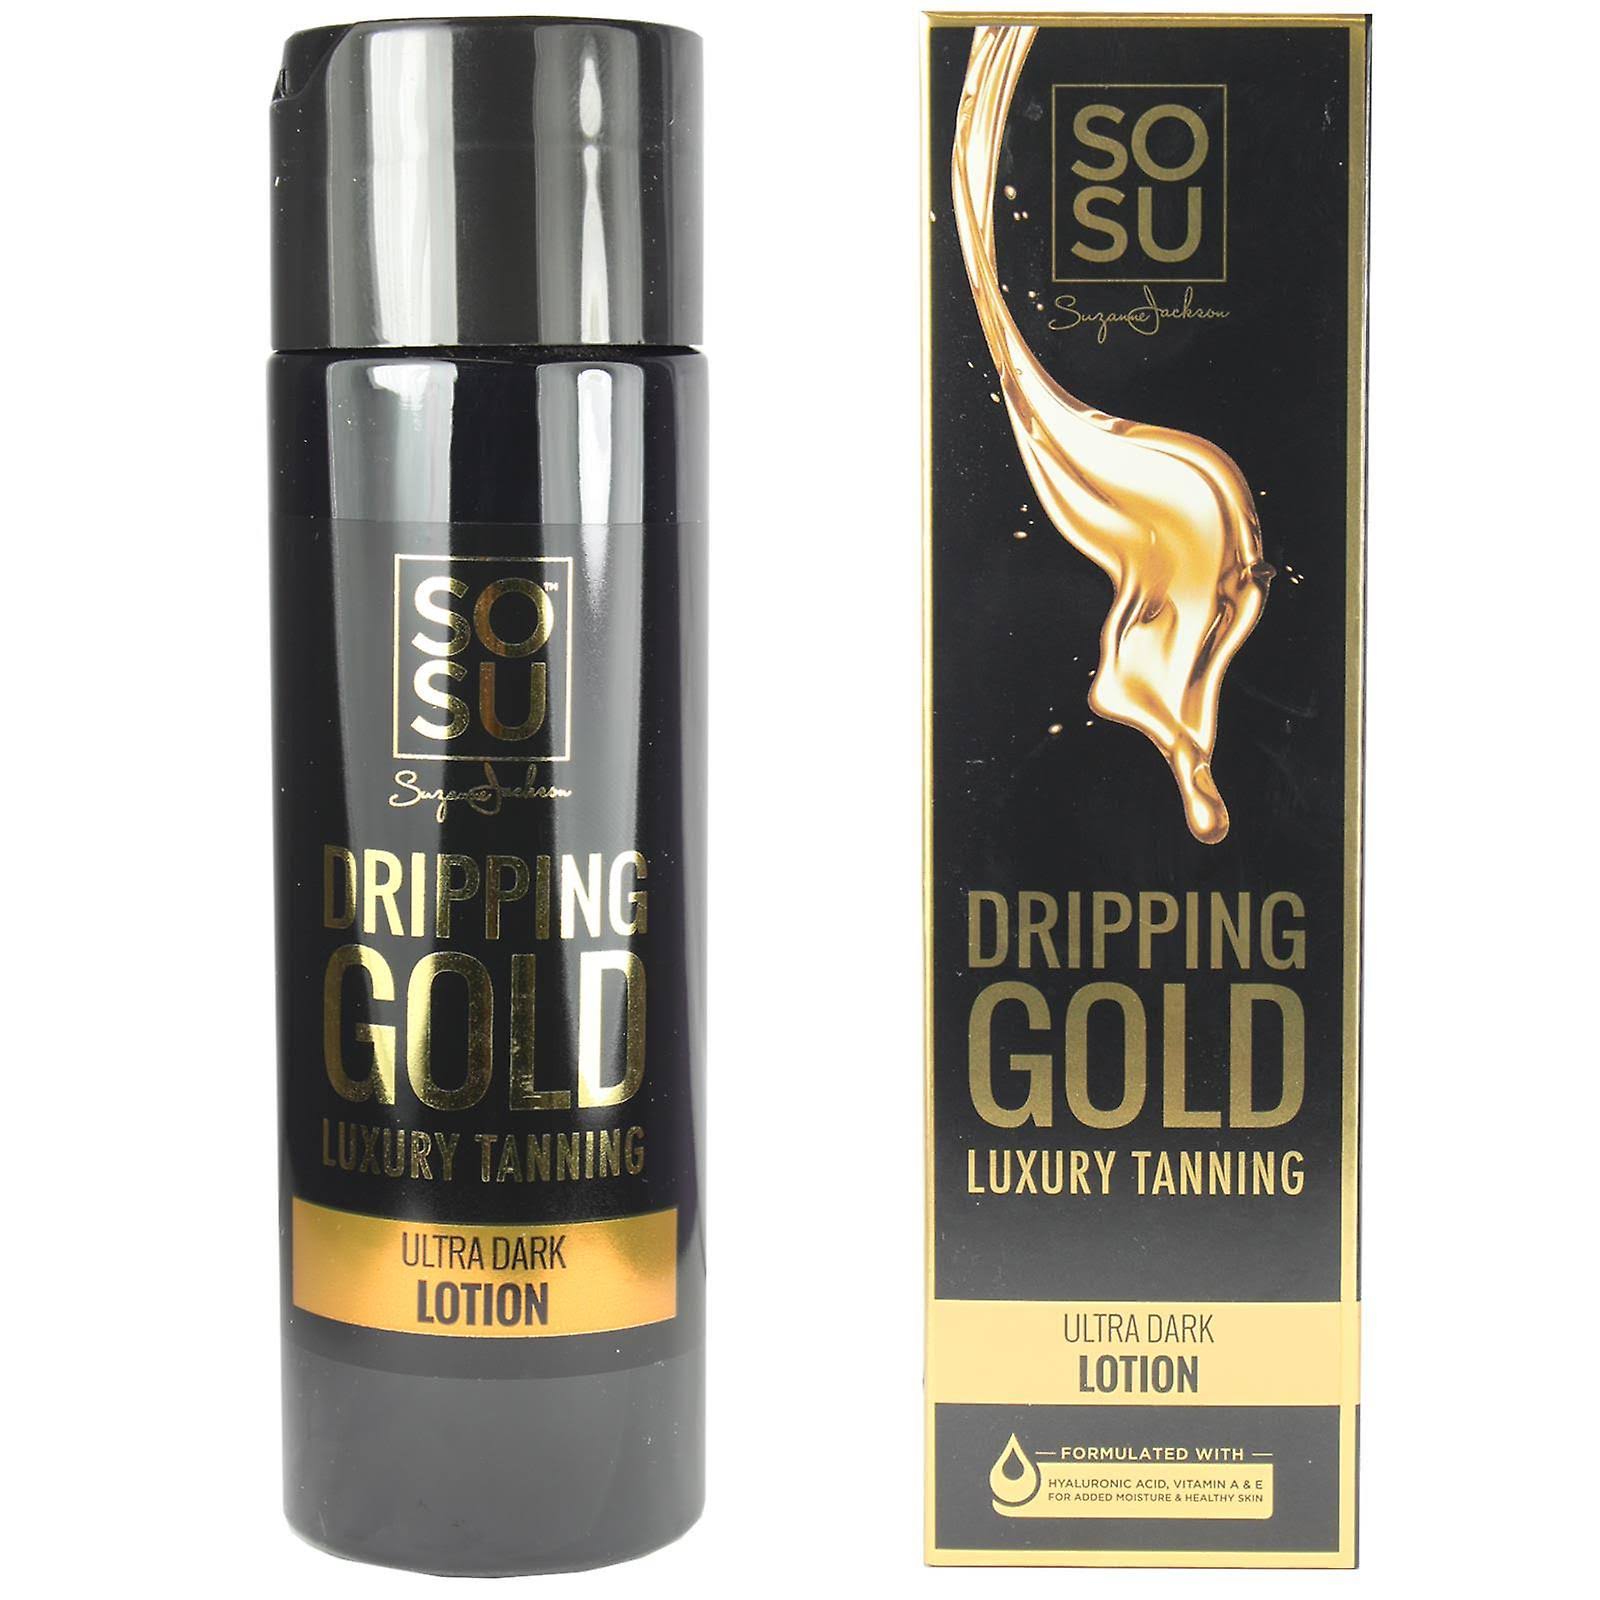 SOSU by Suzanne Jackson Dripping Gold Luxury Tanning Lotion - Ultra Dark